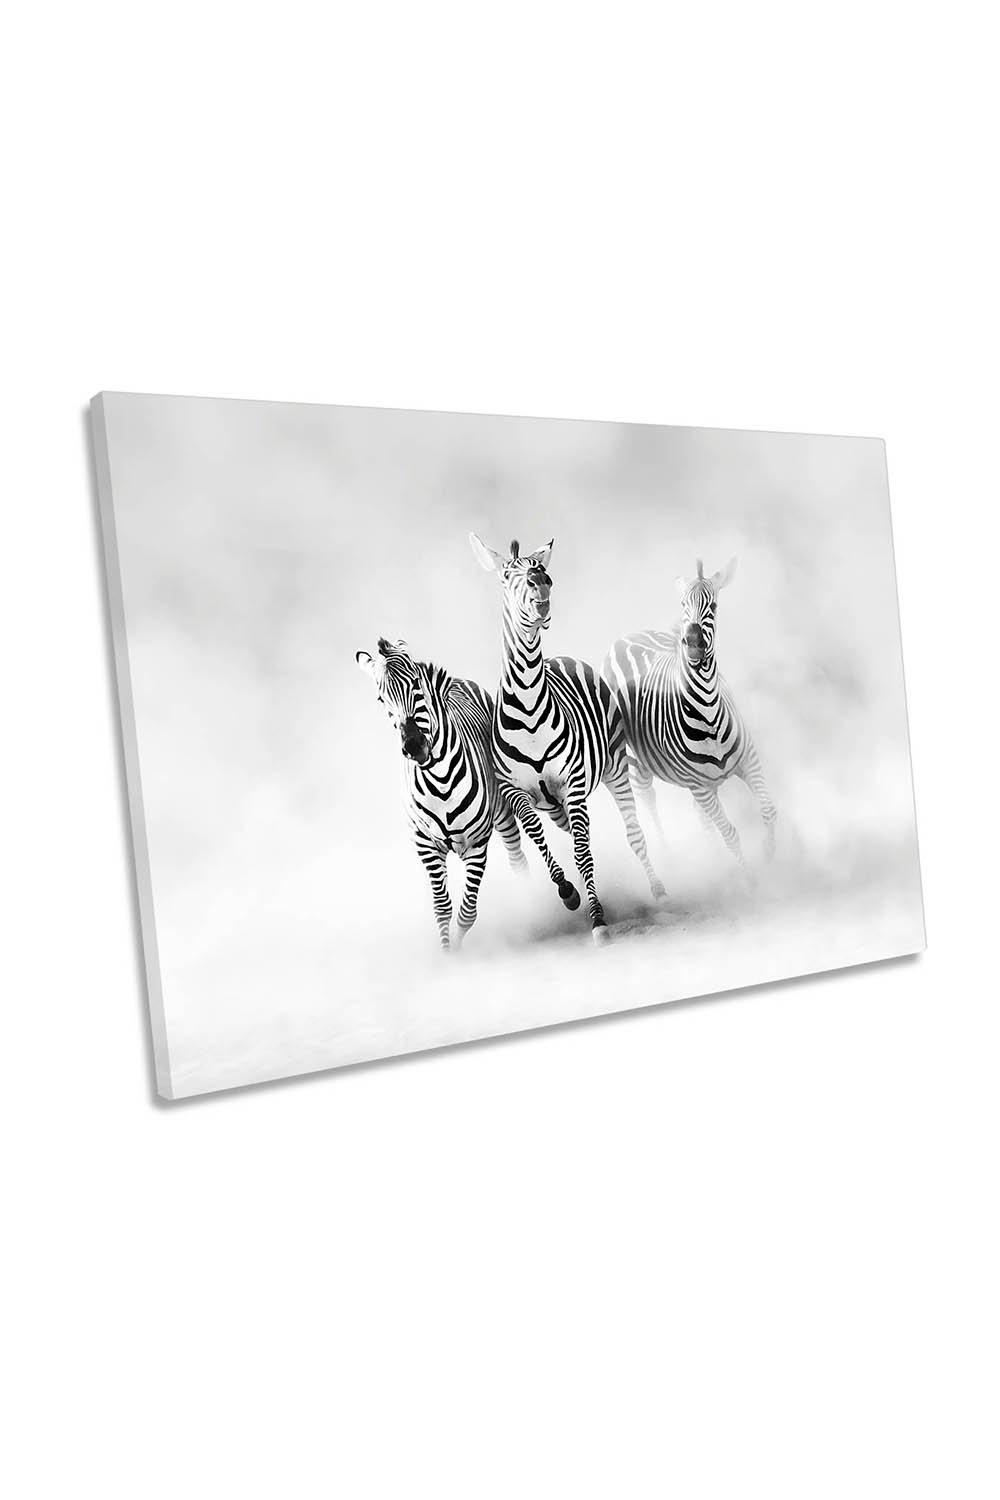 Zebras Dust Wildlife Canvas Wall Art Picture Print